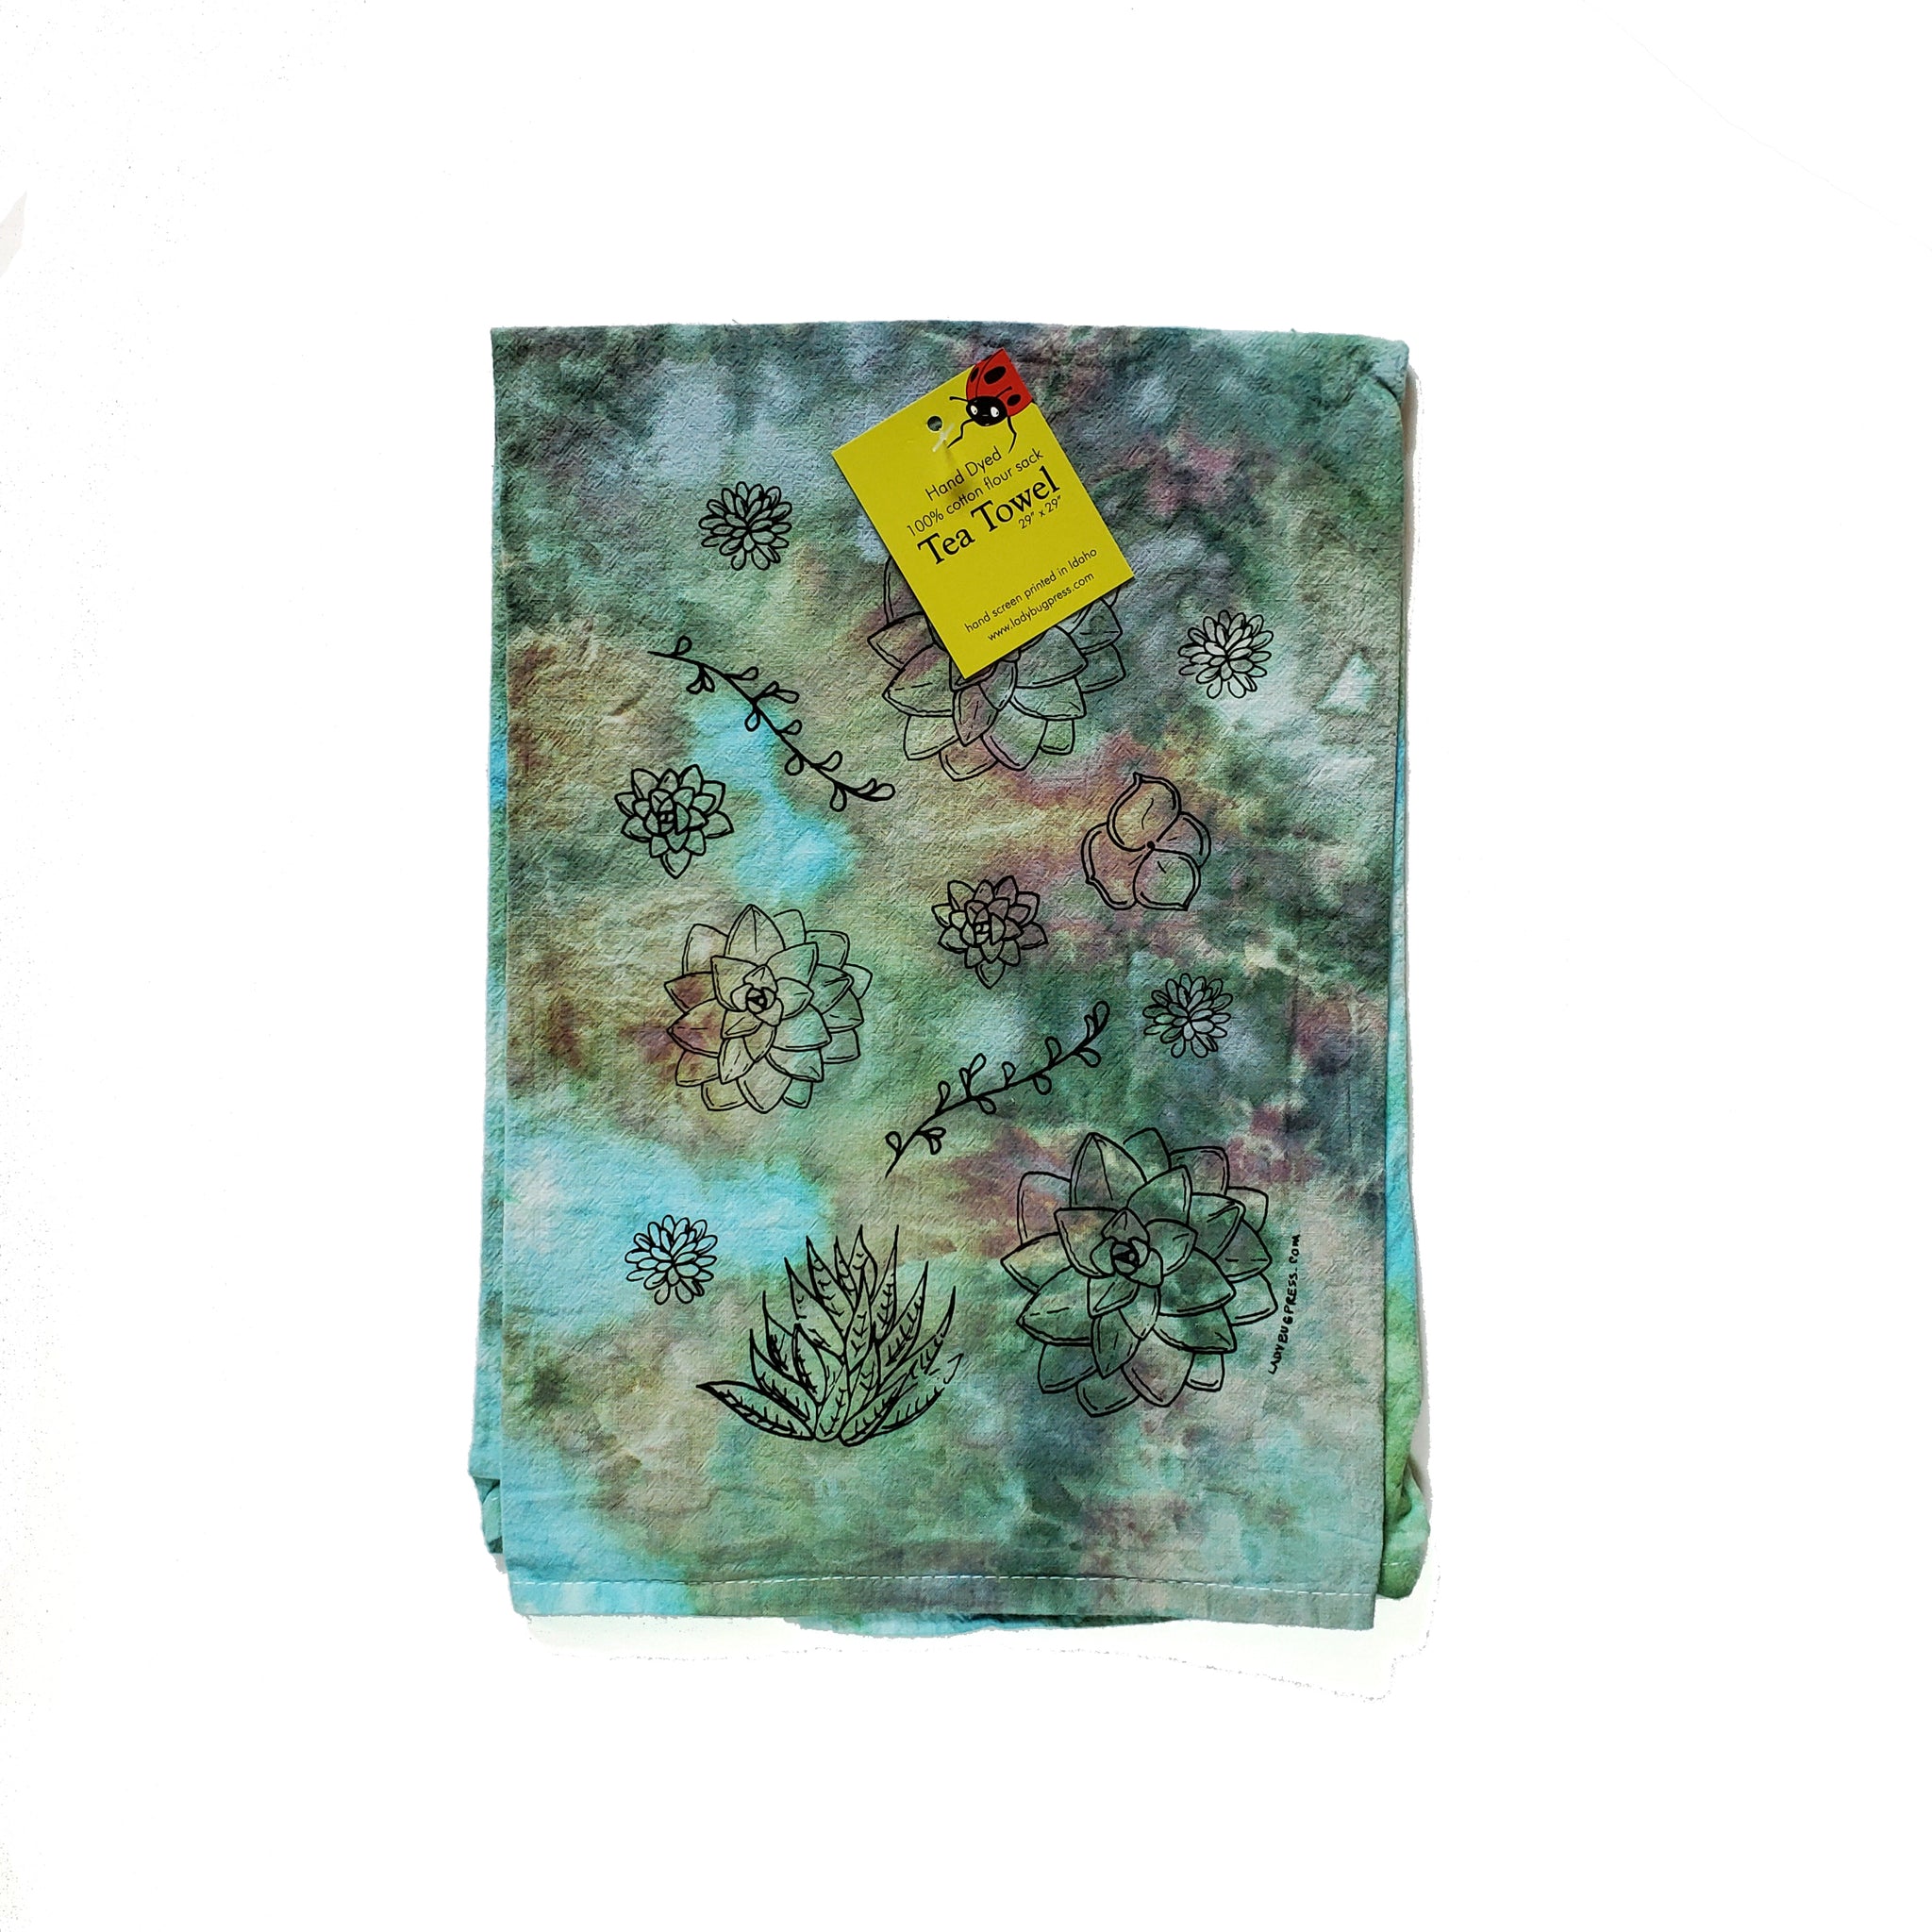 Dyed Succulent Screen Printed Tea Towel, flour sack towel